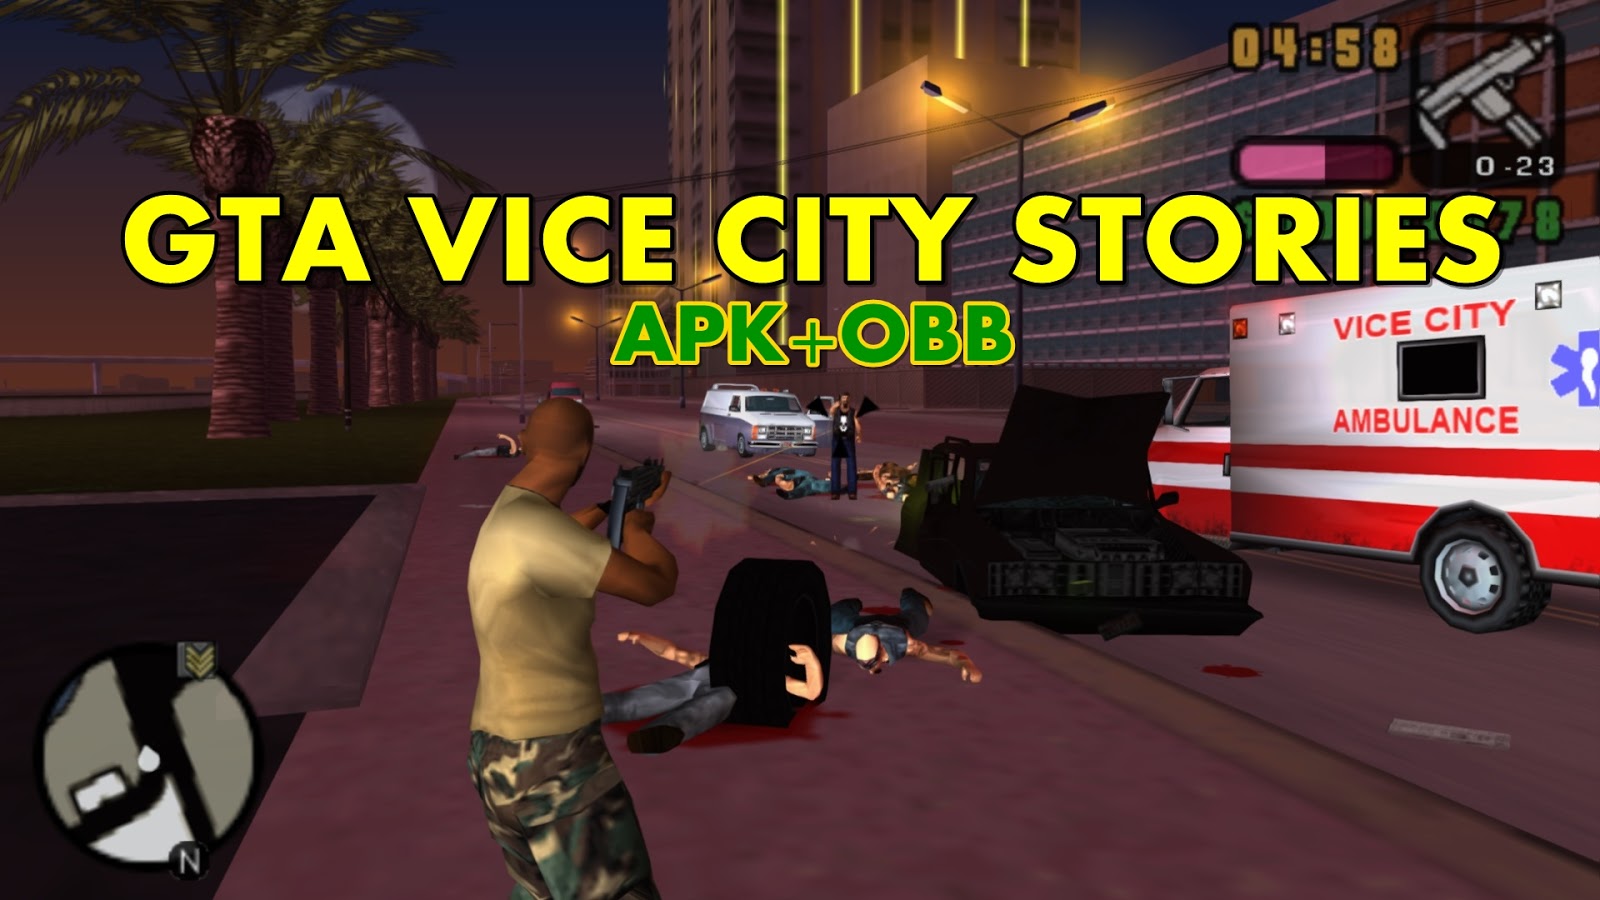 GTA VICE CITY STORIES APK+OBB